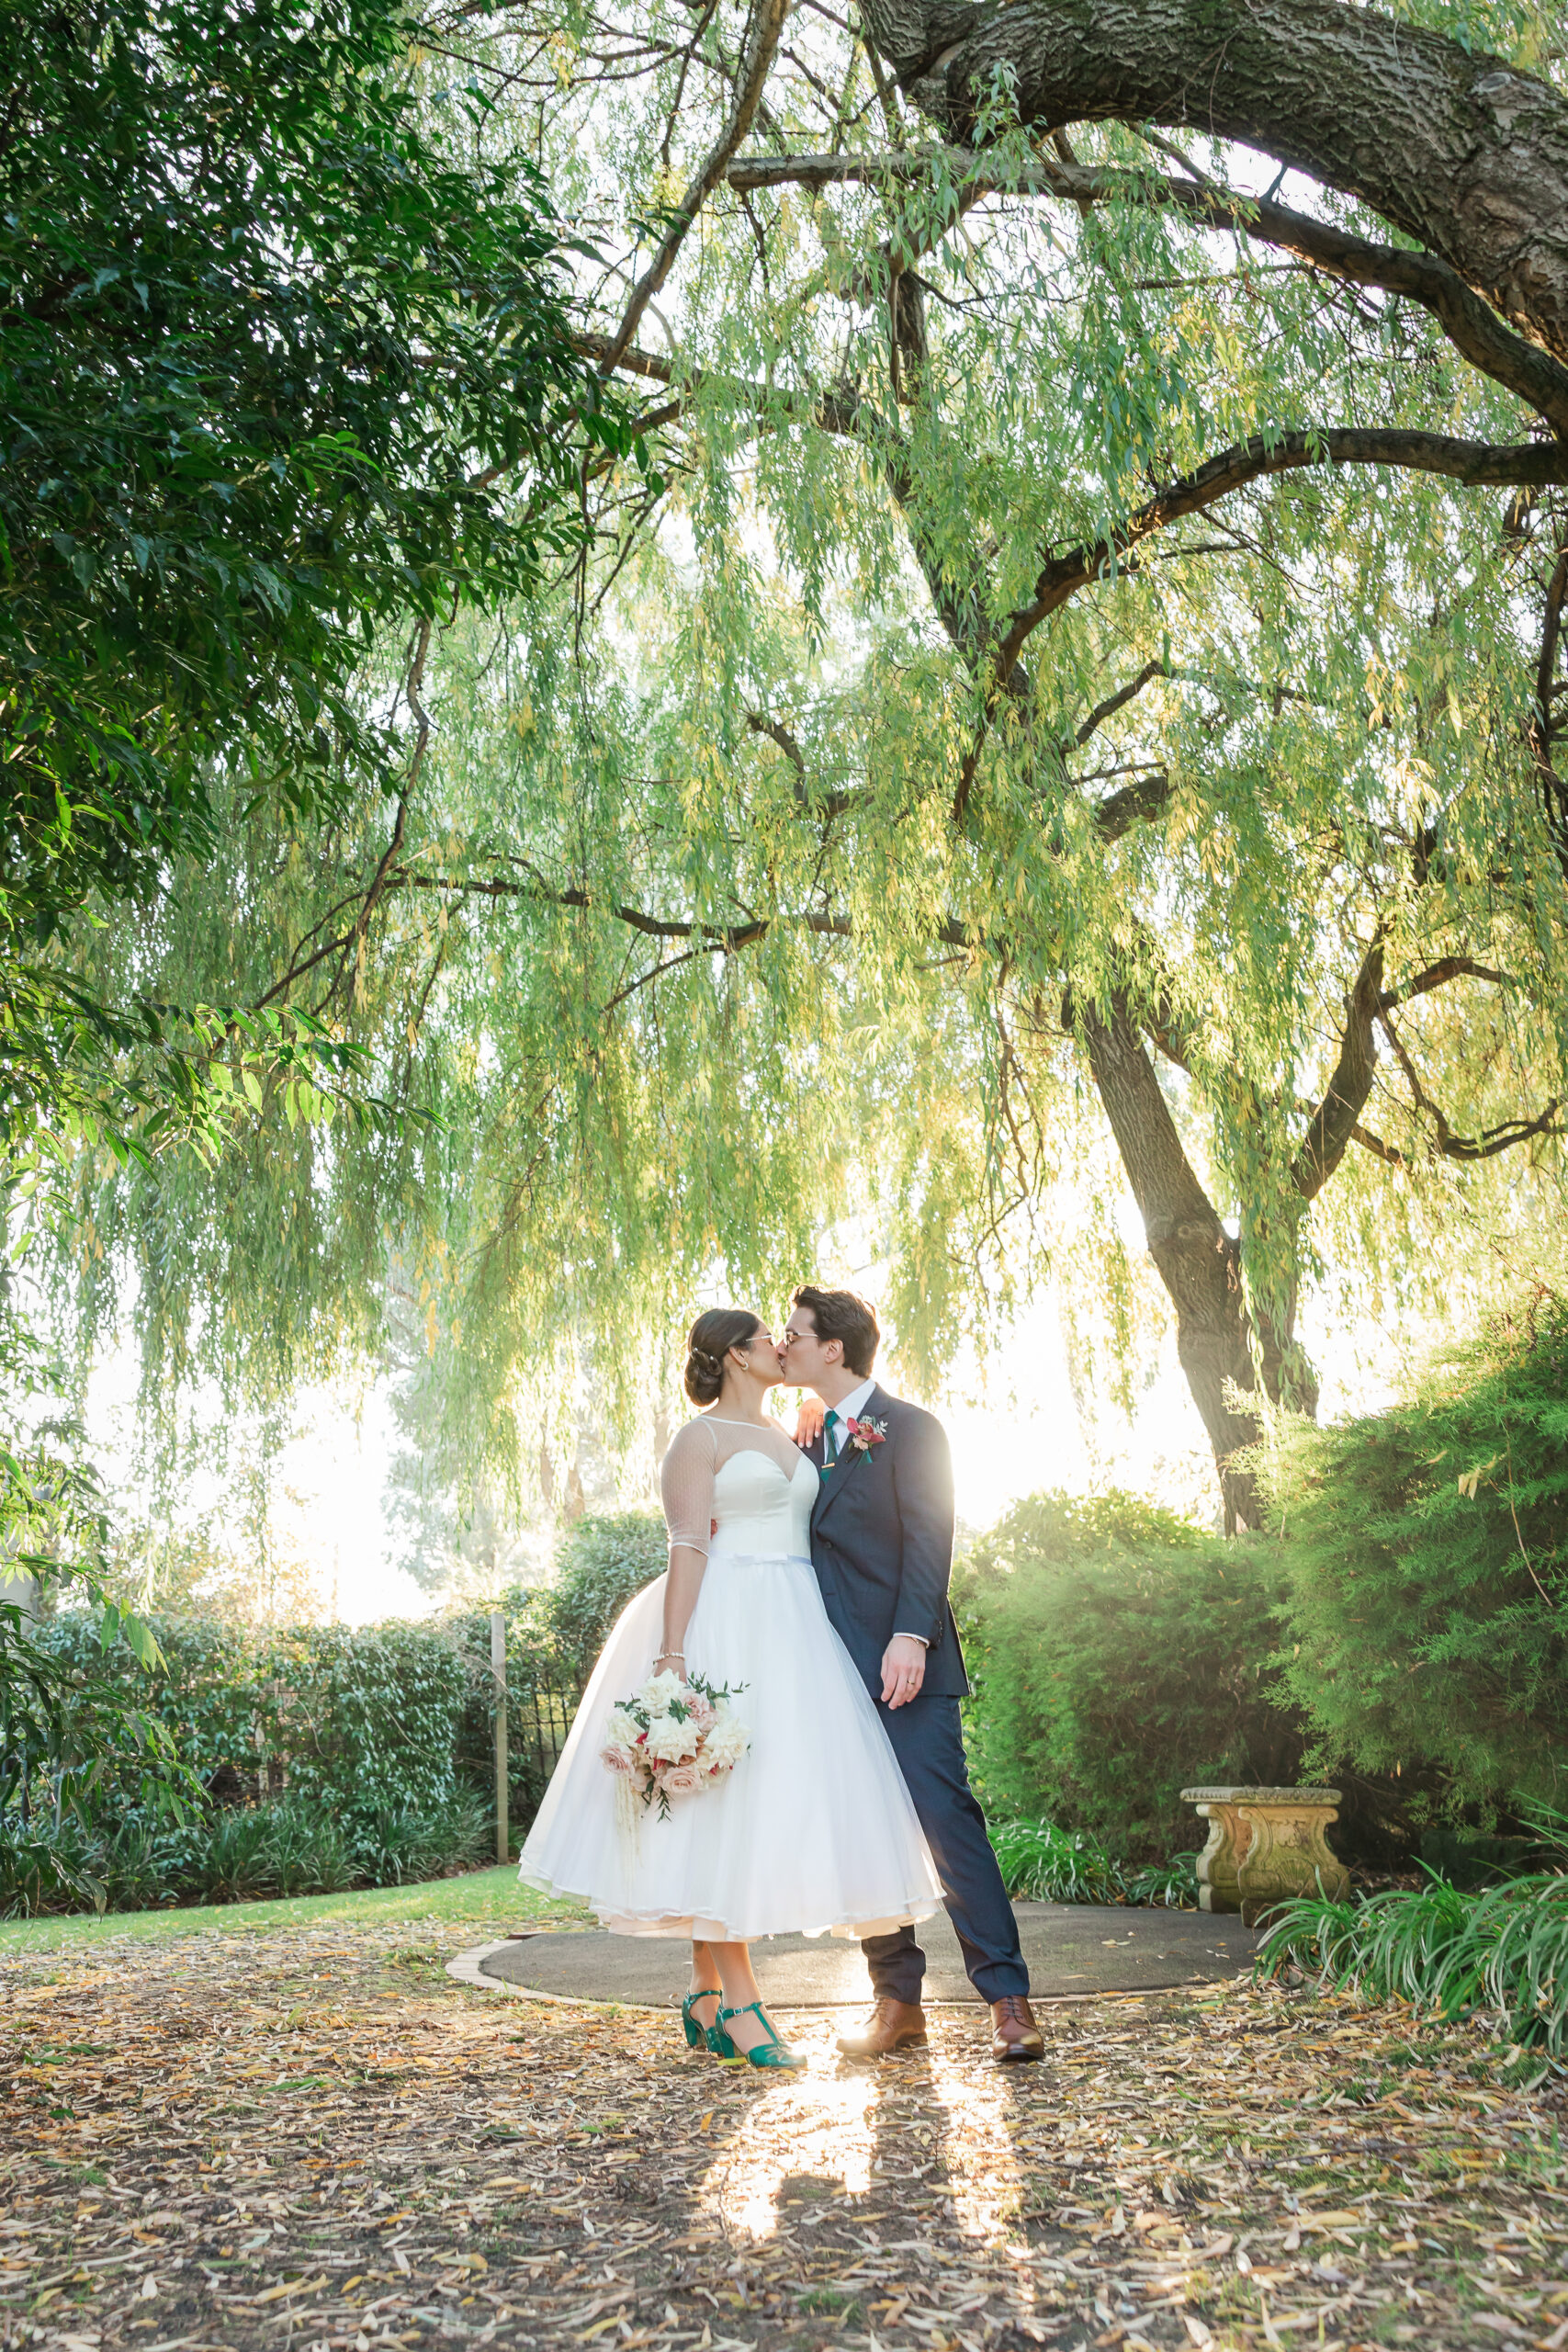 , Tamara and Jesse&#8217;s wedding at Ballara Receptions Eltham captured by ATEIA Photography &#038; Video